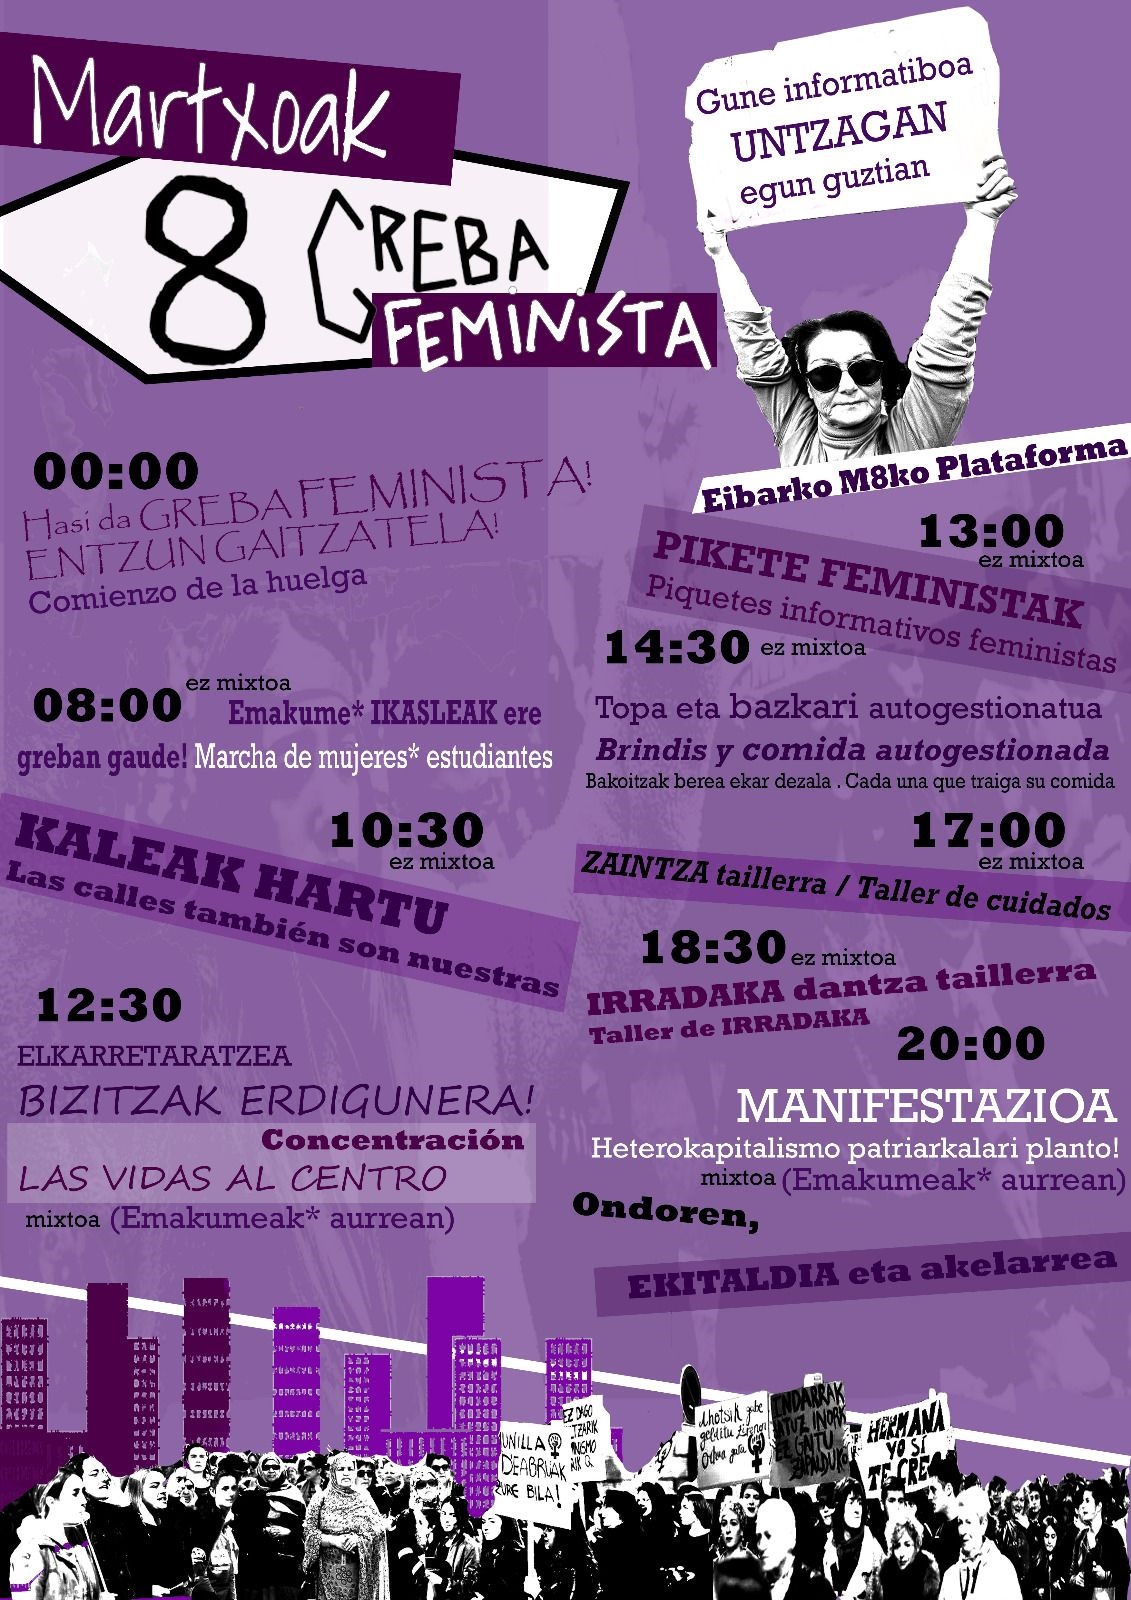 Huelga Feminista organizada por la Plataforma Feminista del 8 de marzo de Eibar